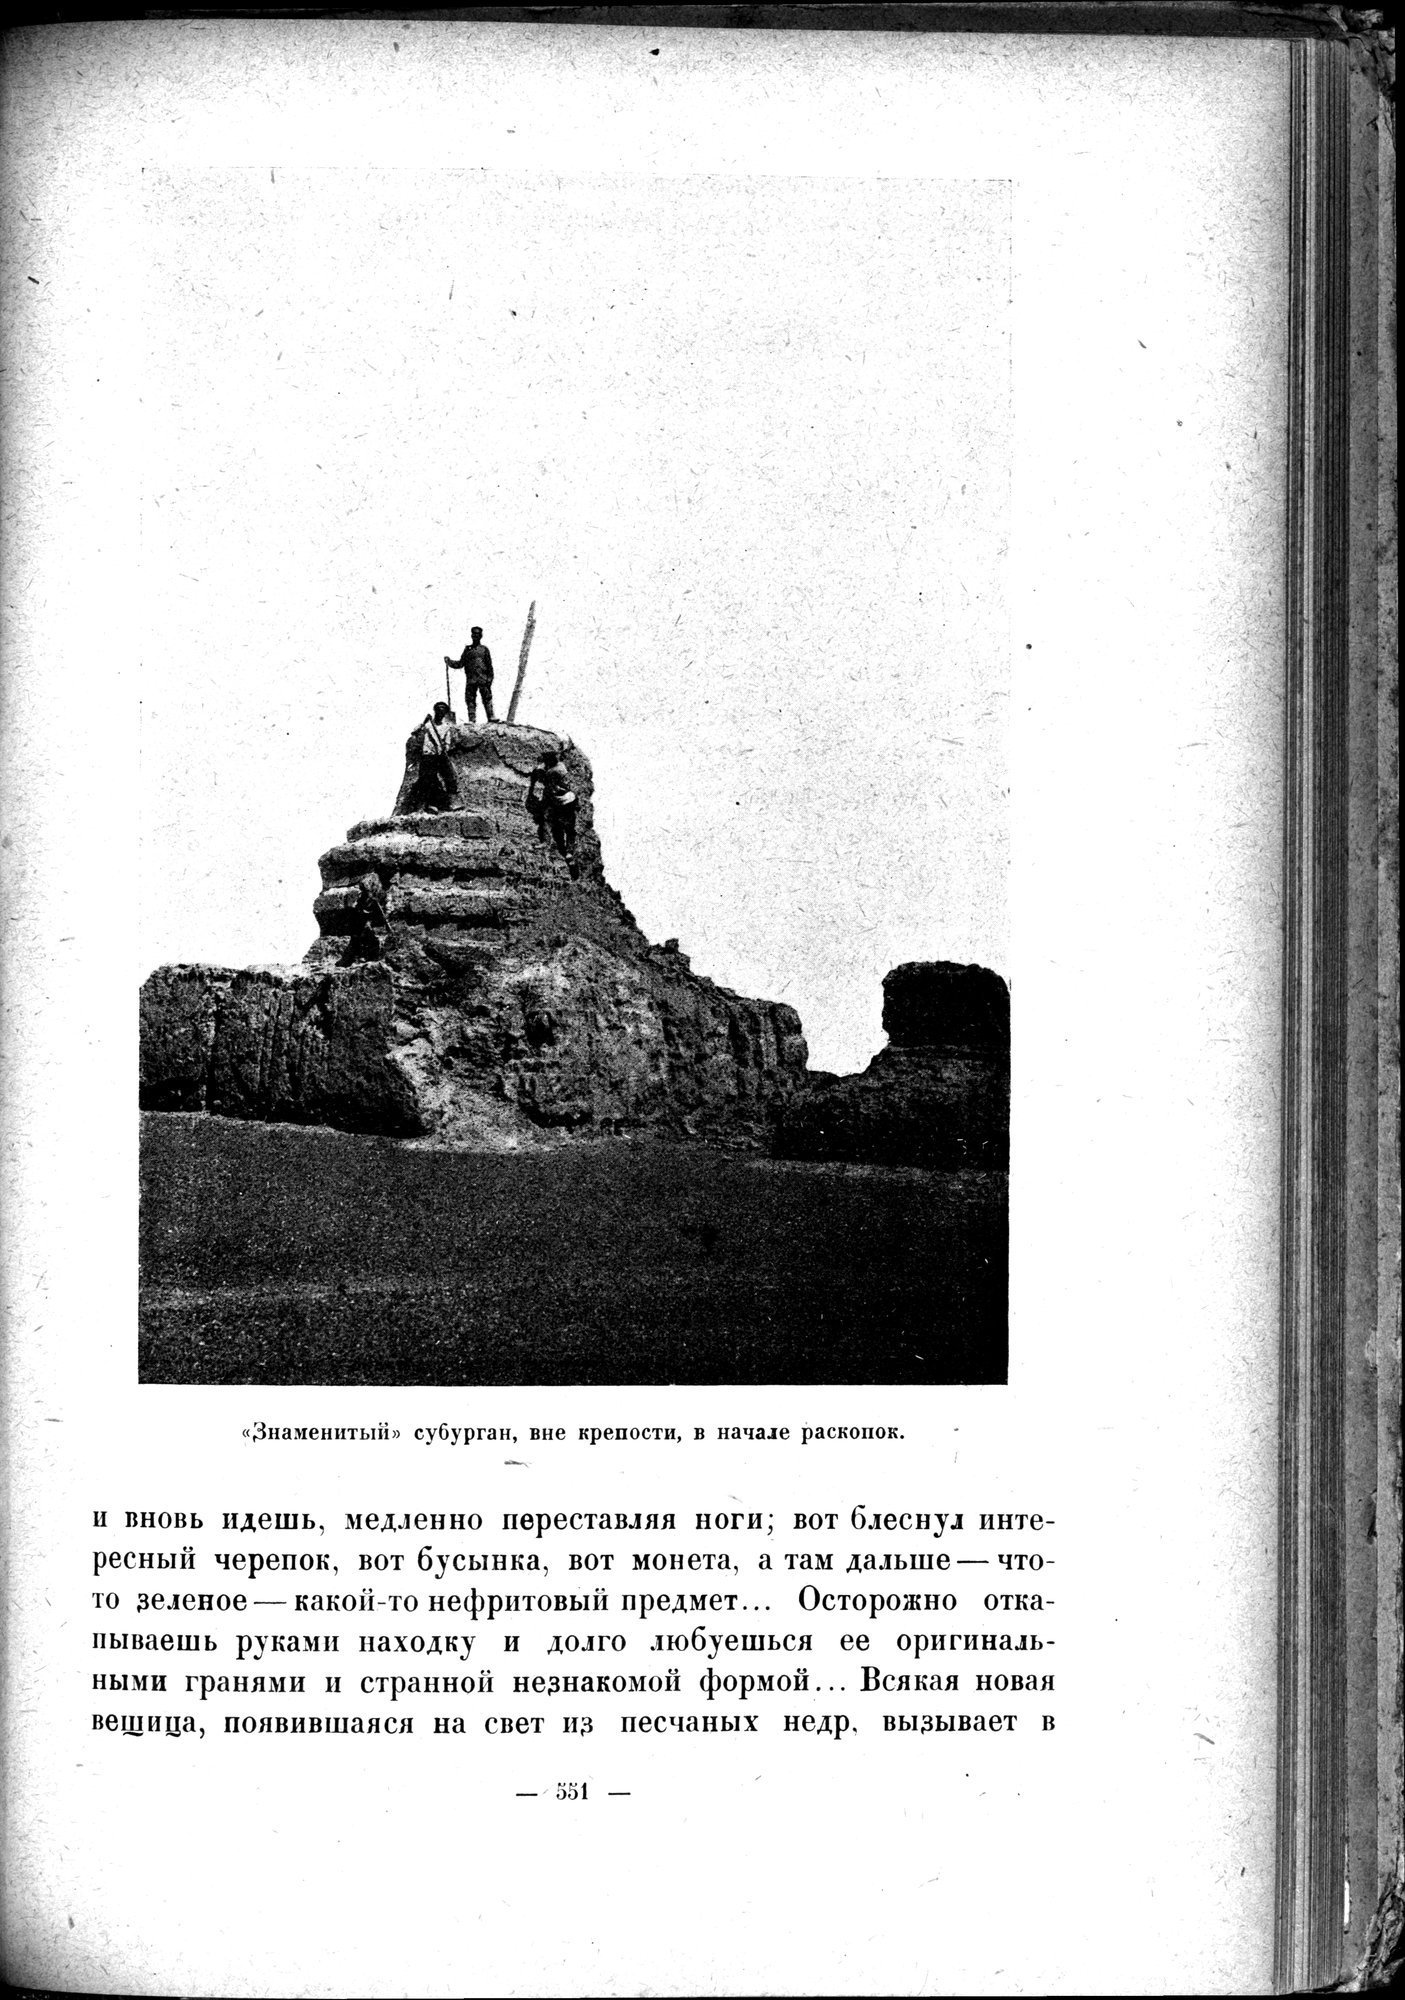 Mongoliya i Amdo i mertby gorod Khara-Khoto : vol.1 / Page 637 (Grayscale High Resolution Image)